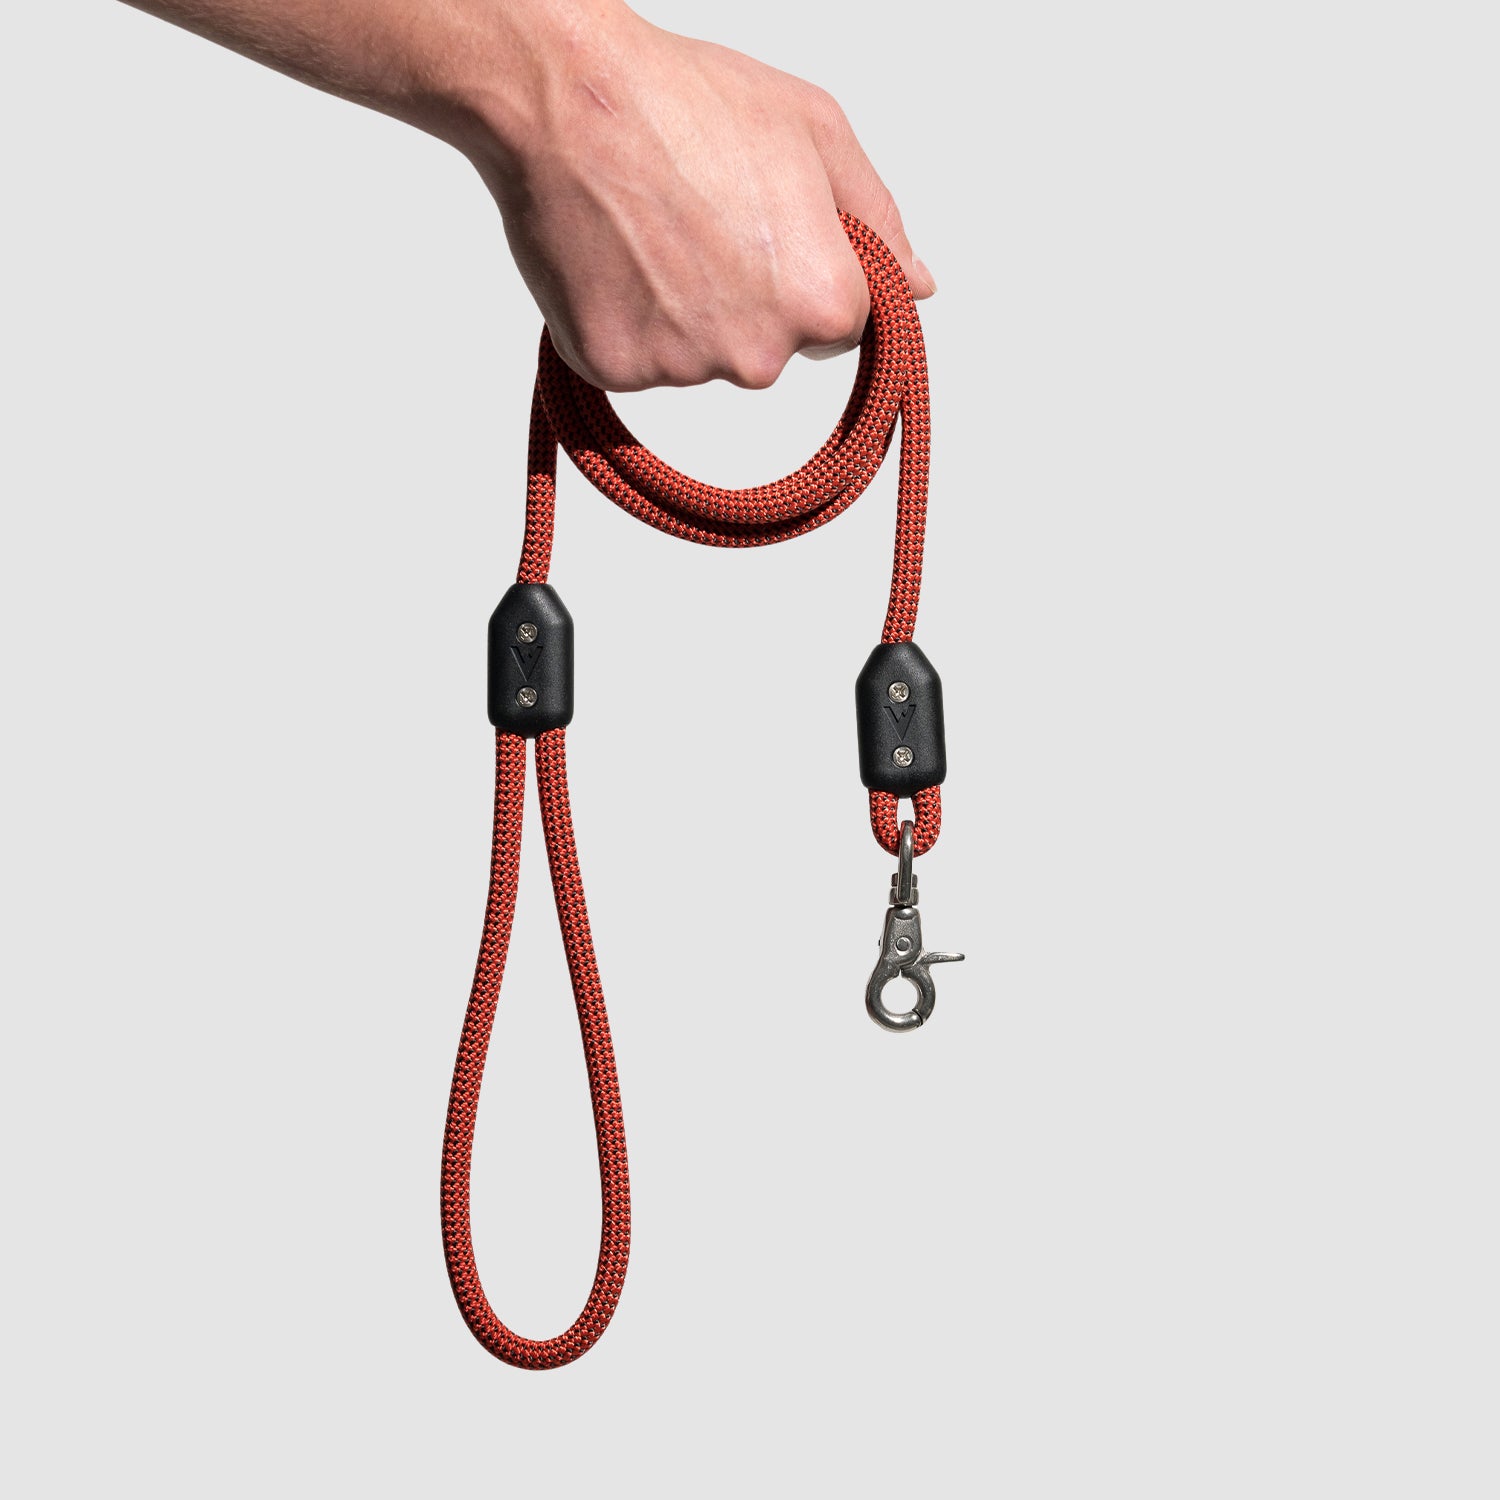 atlas pet company lifetime leash climbing rope lifetime warranty dog leash --ruby